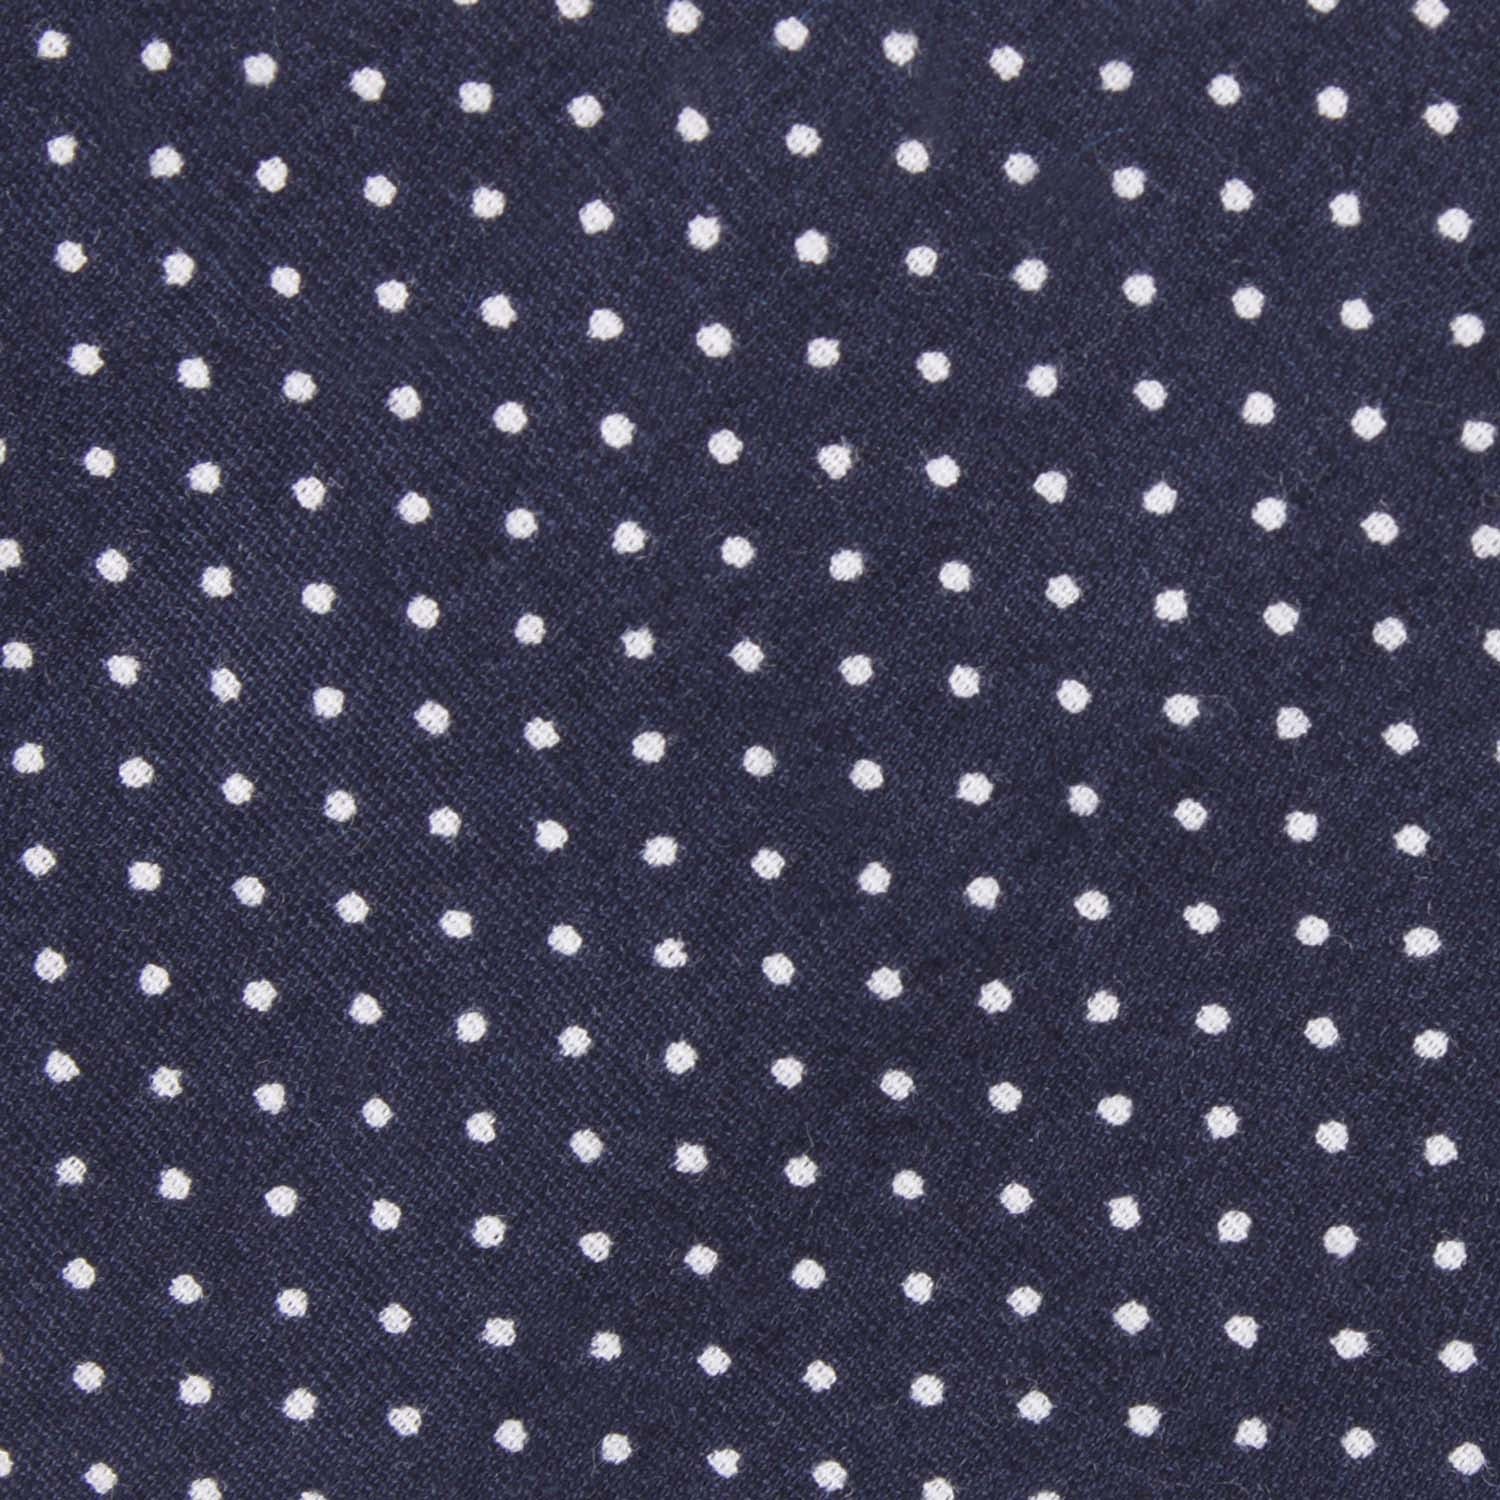 Navy Blue Cotton with White Mini Polka Dots Fabric Pocket Square C154